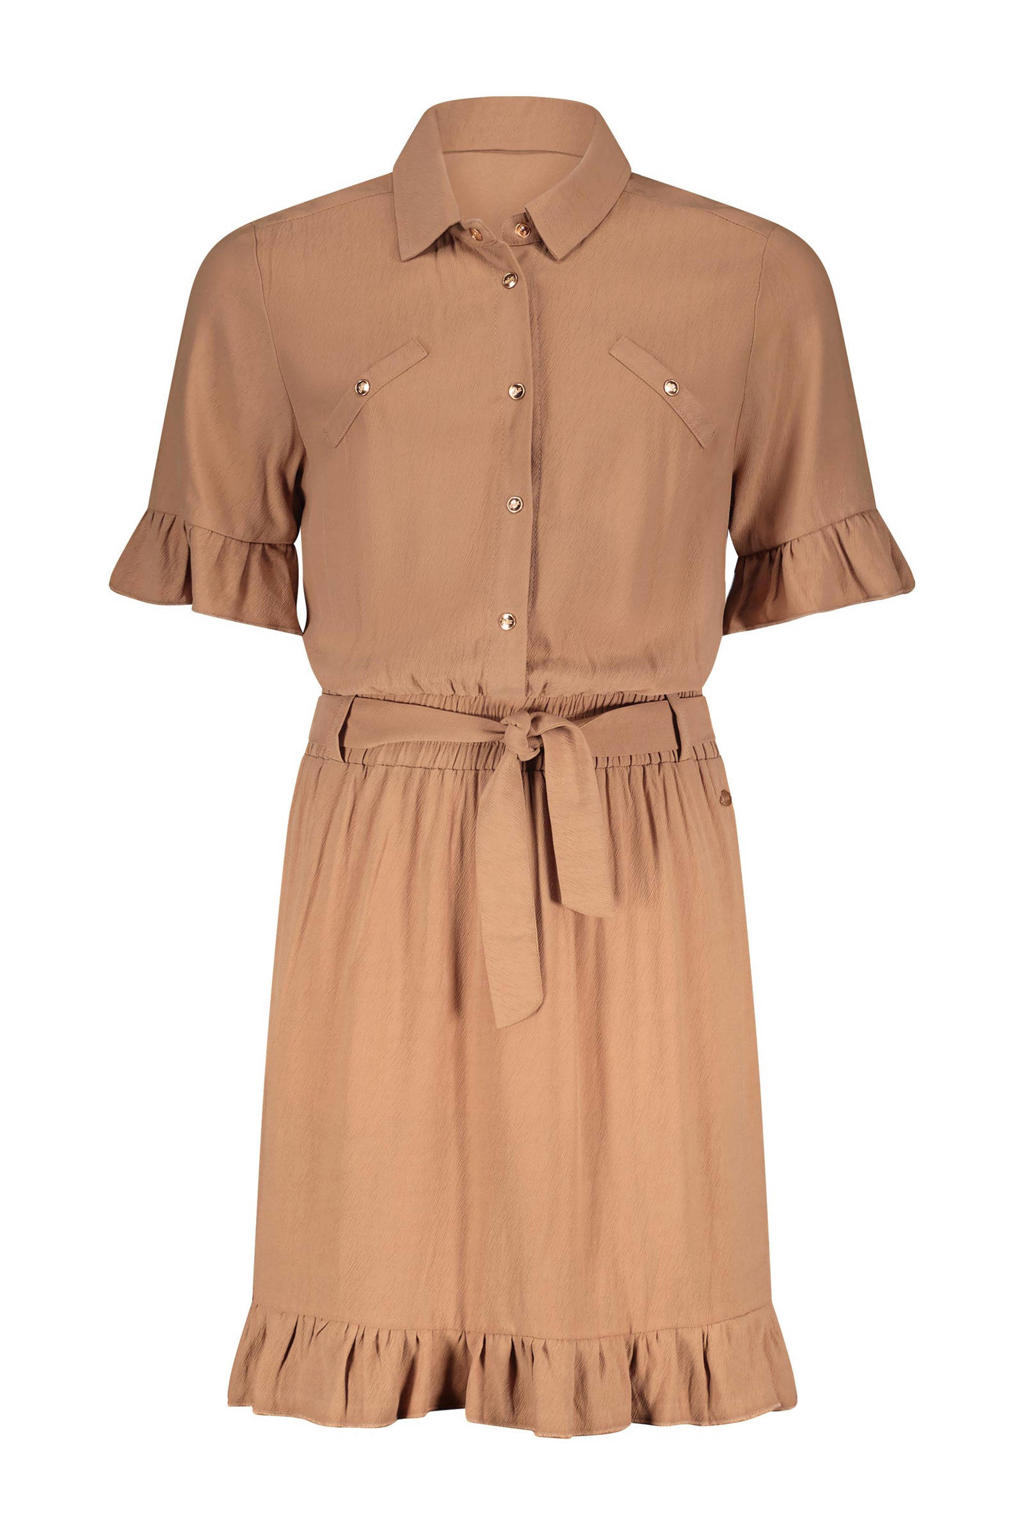 Bruine meisjes NoBell’ jurk Madua van lyocell met korte mouwen, klassieke kraag, elastische tailleband met koord en ceintuur